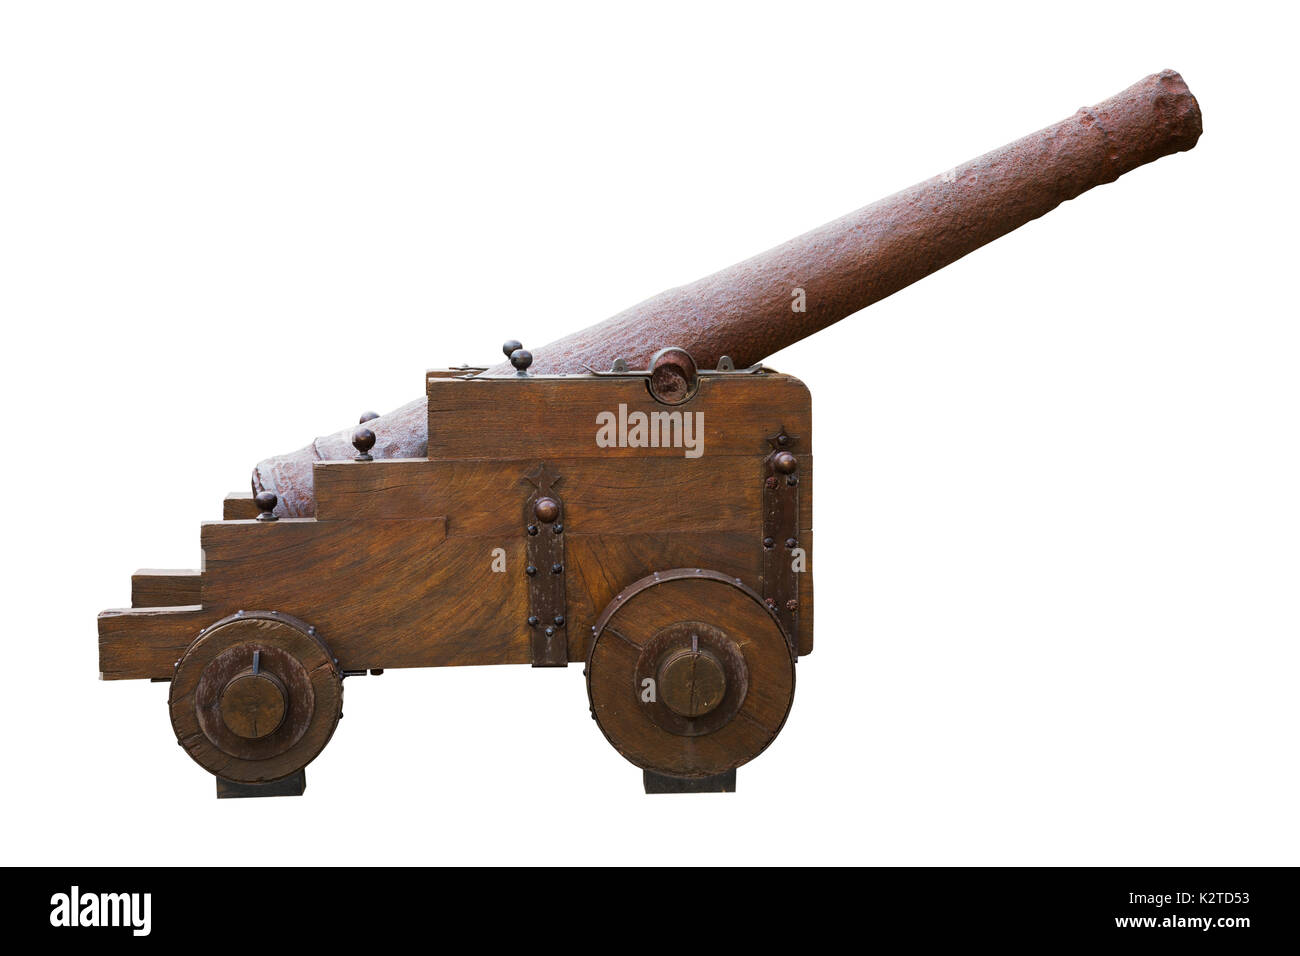 old iron cannon gun isolated on white background Stock Photo